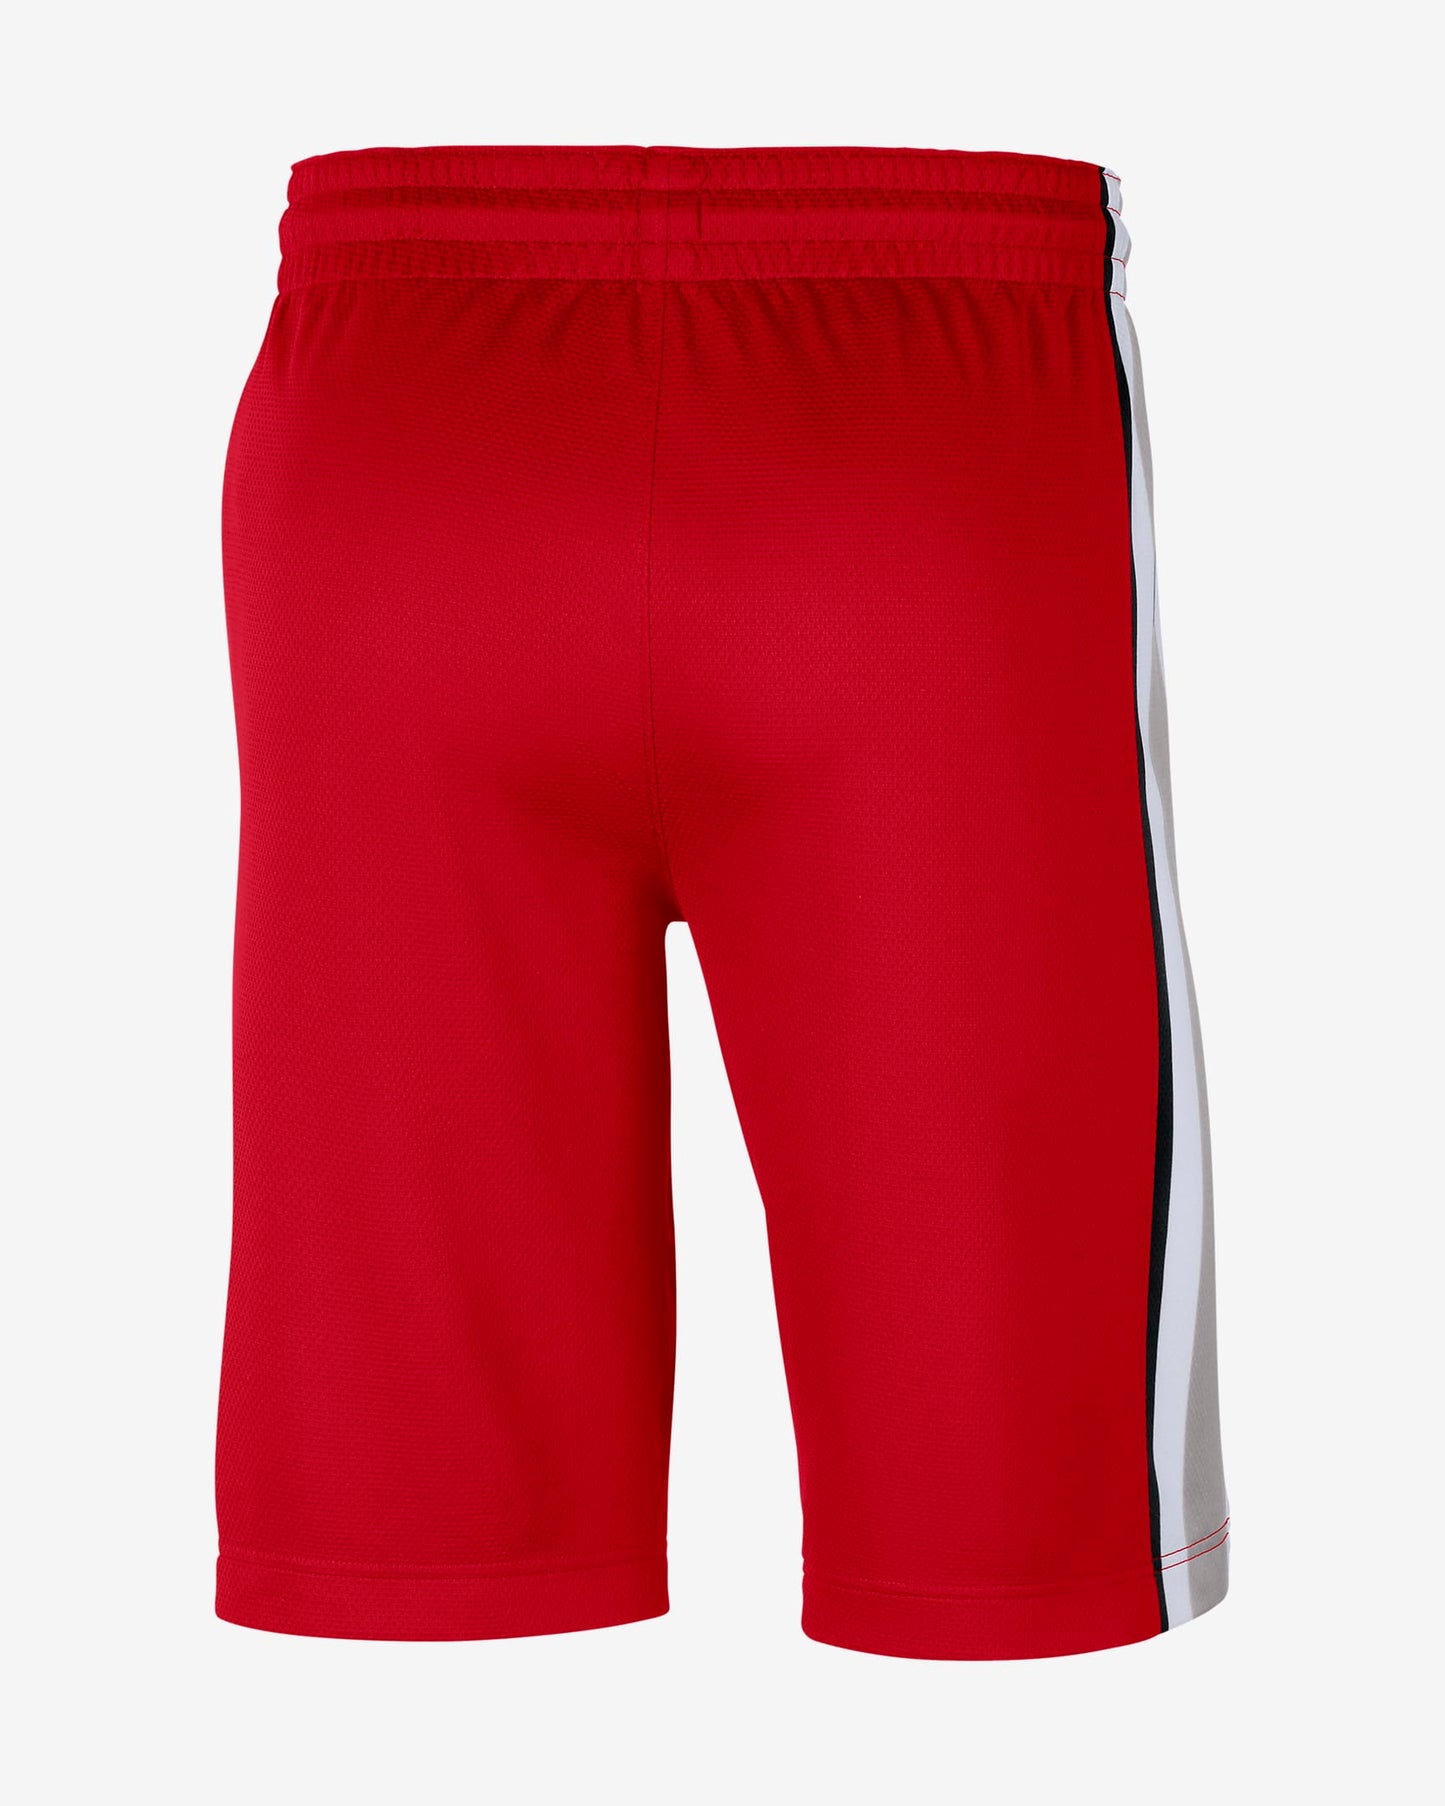 Men's Nike NCAA Ohio State Buckeyes Red Basketball Shorts